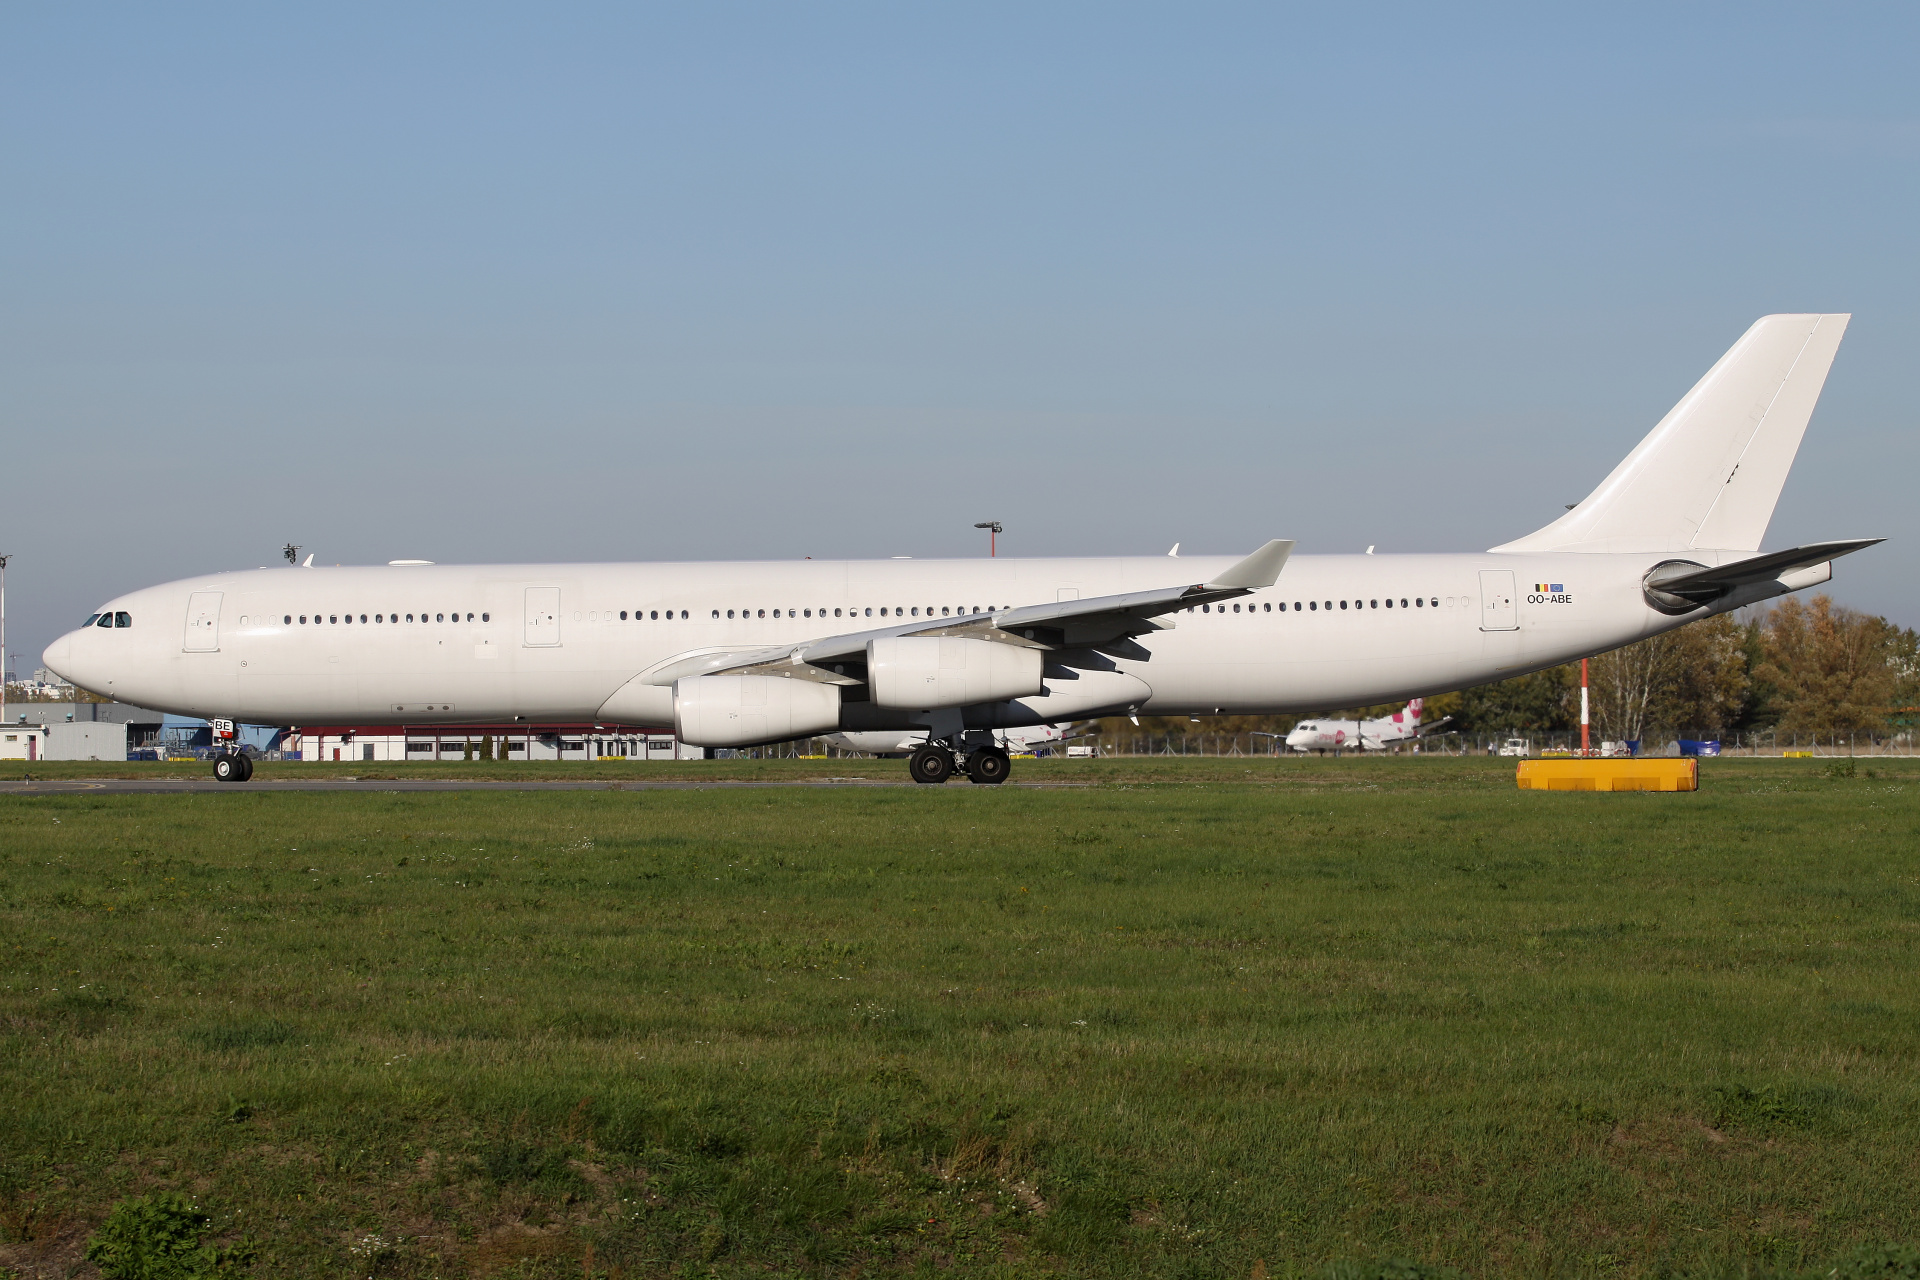 OO-ABE (Aircraft » EPWA Spotting » Airbus A340-300 » Air Belgium)